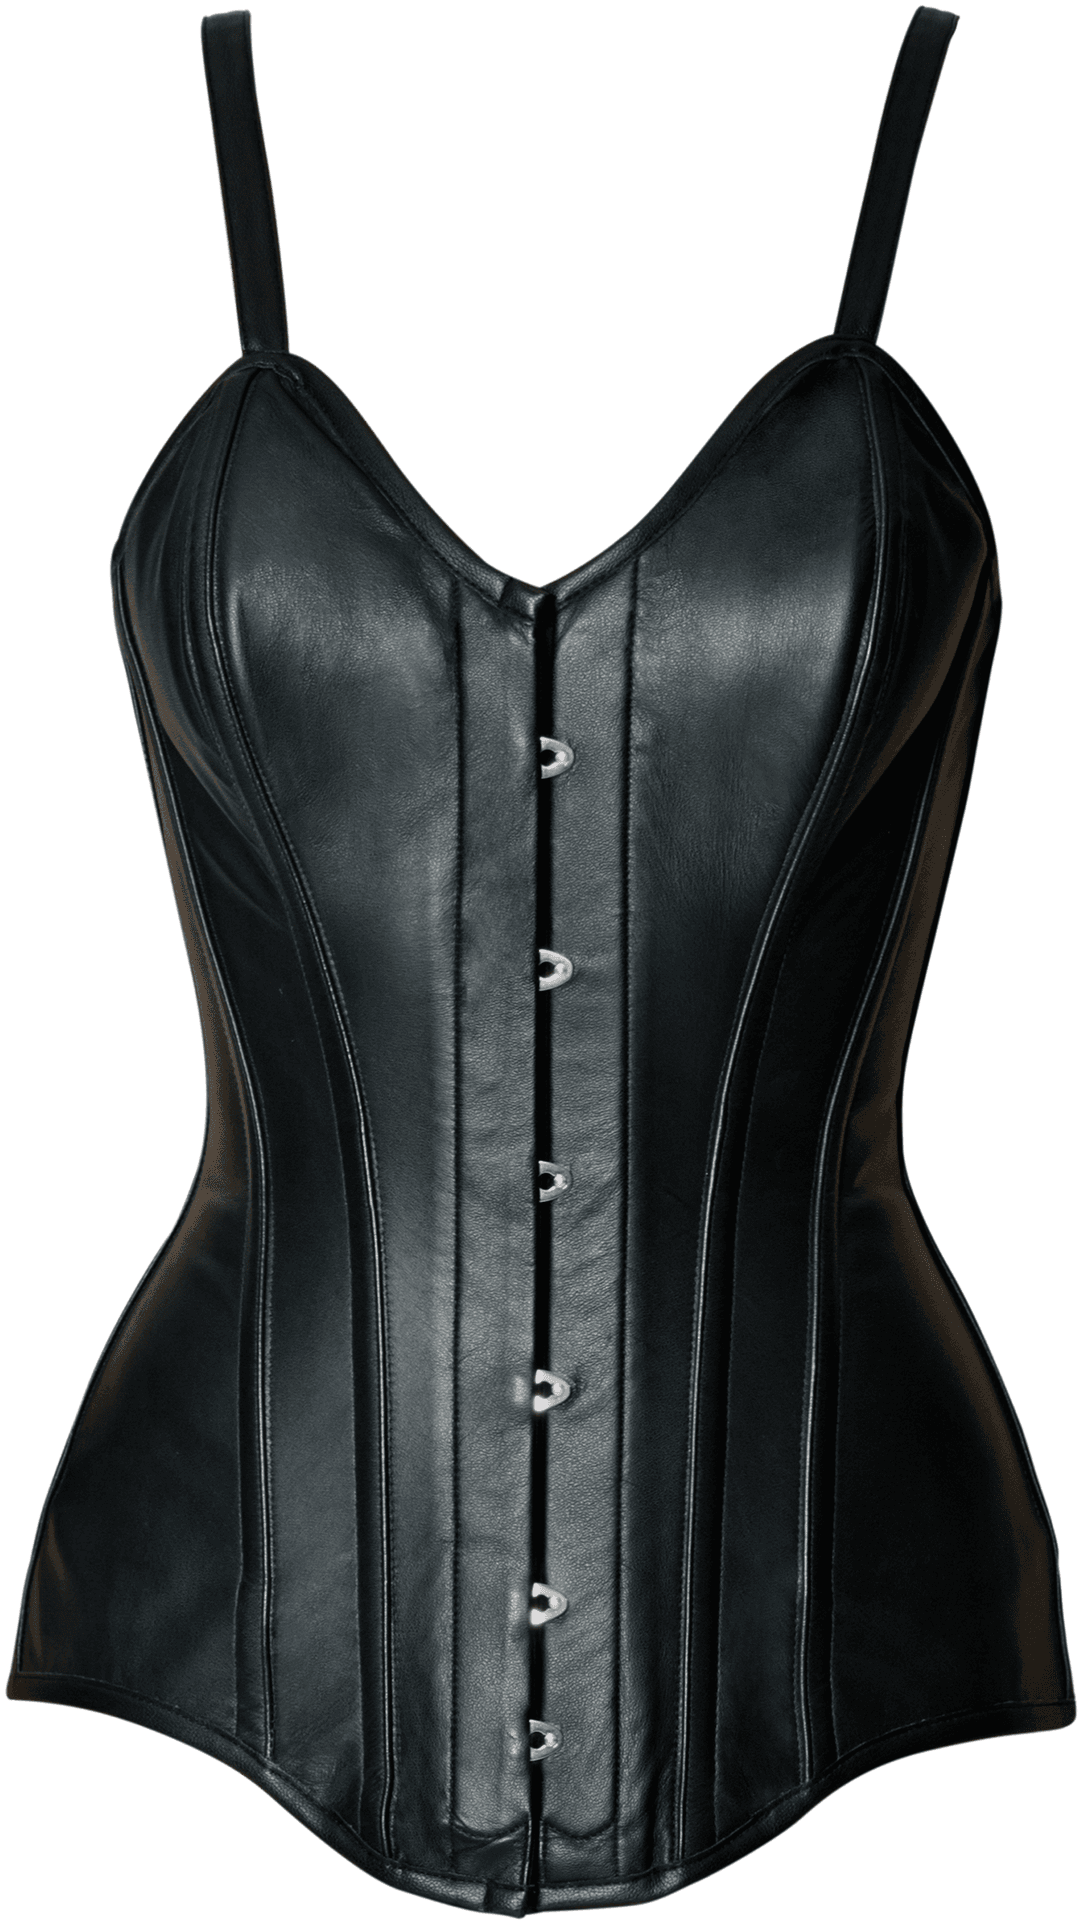 Download Black Leather Corset Lingerie | Wallpapers.com